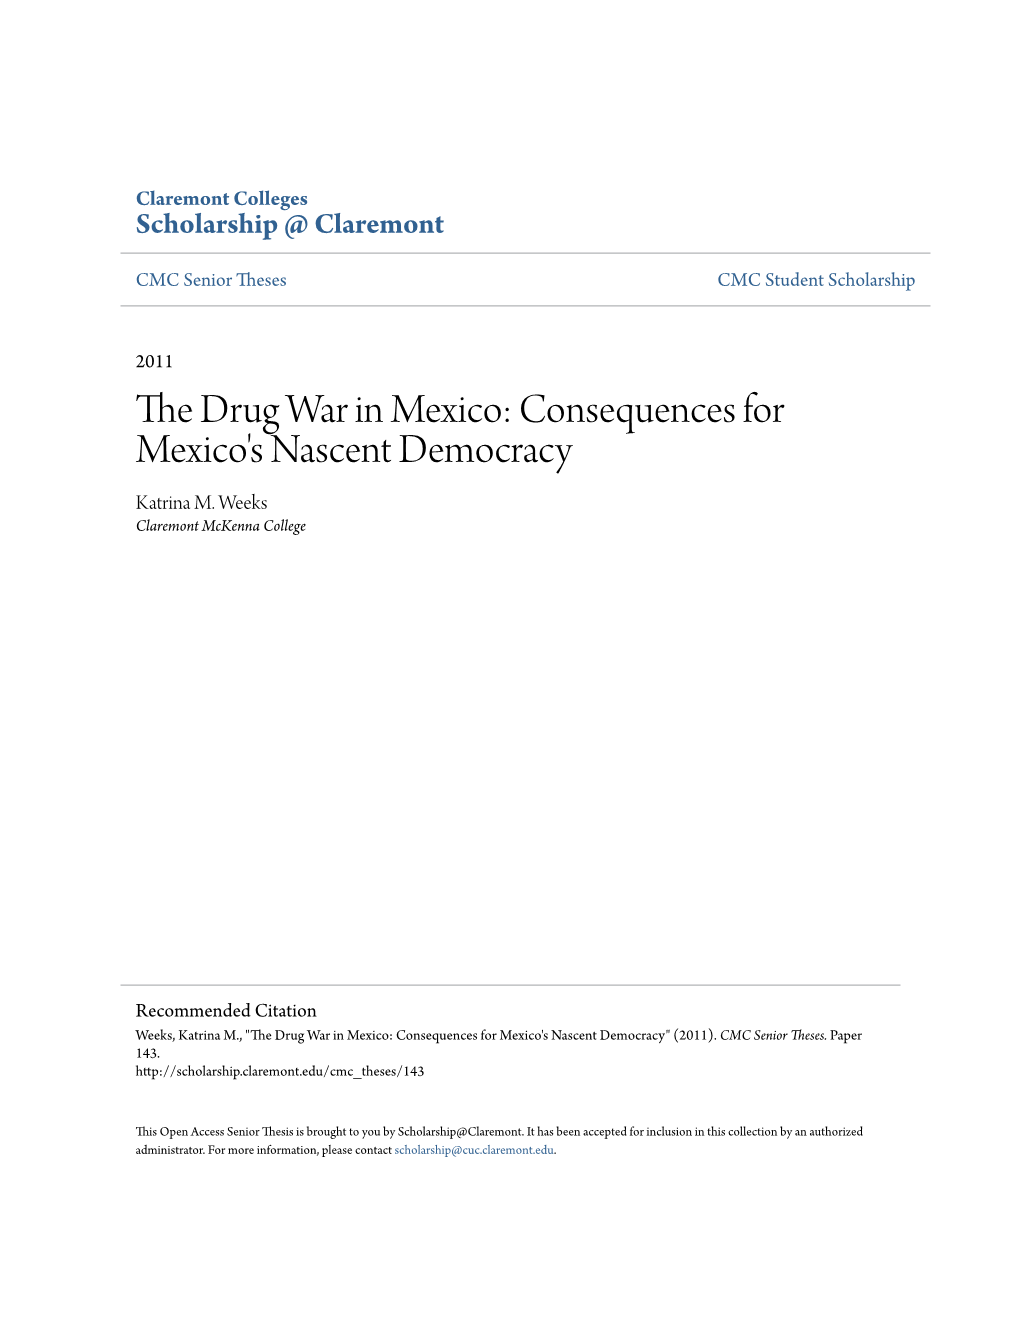 The Drug War in Mexico: Consequences for Mexico's Nascent Democracy Katrina M